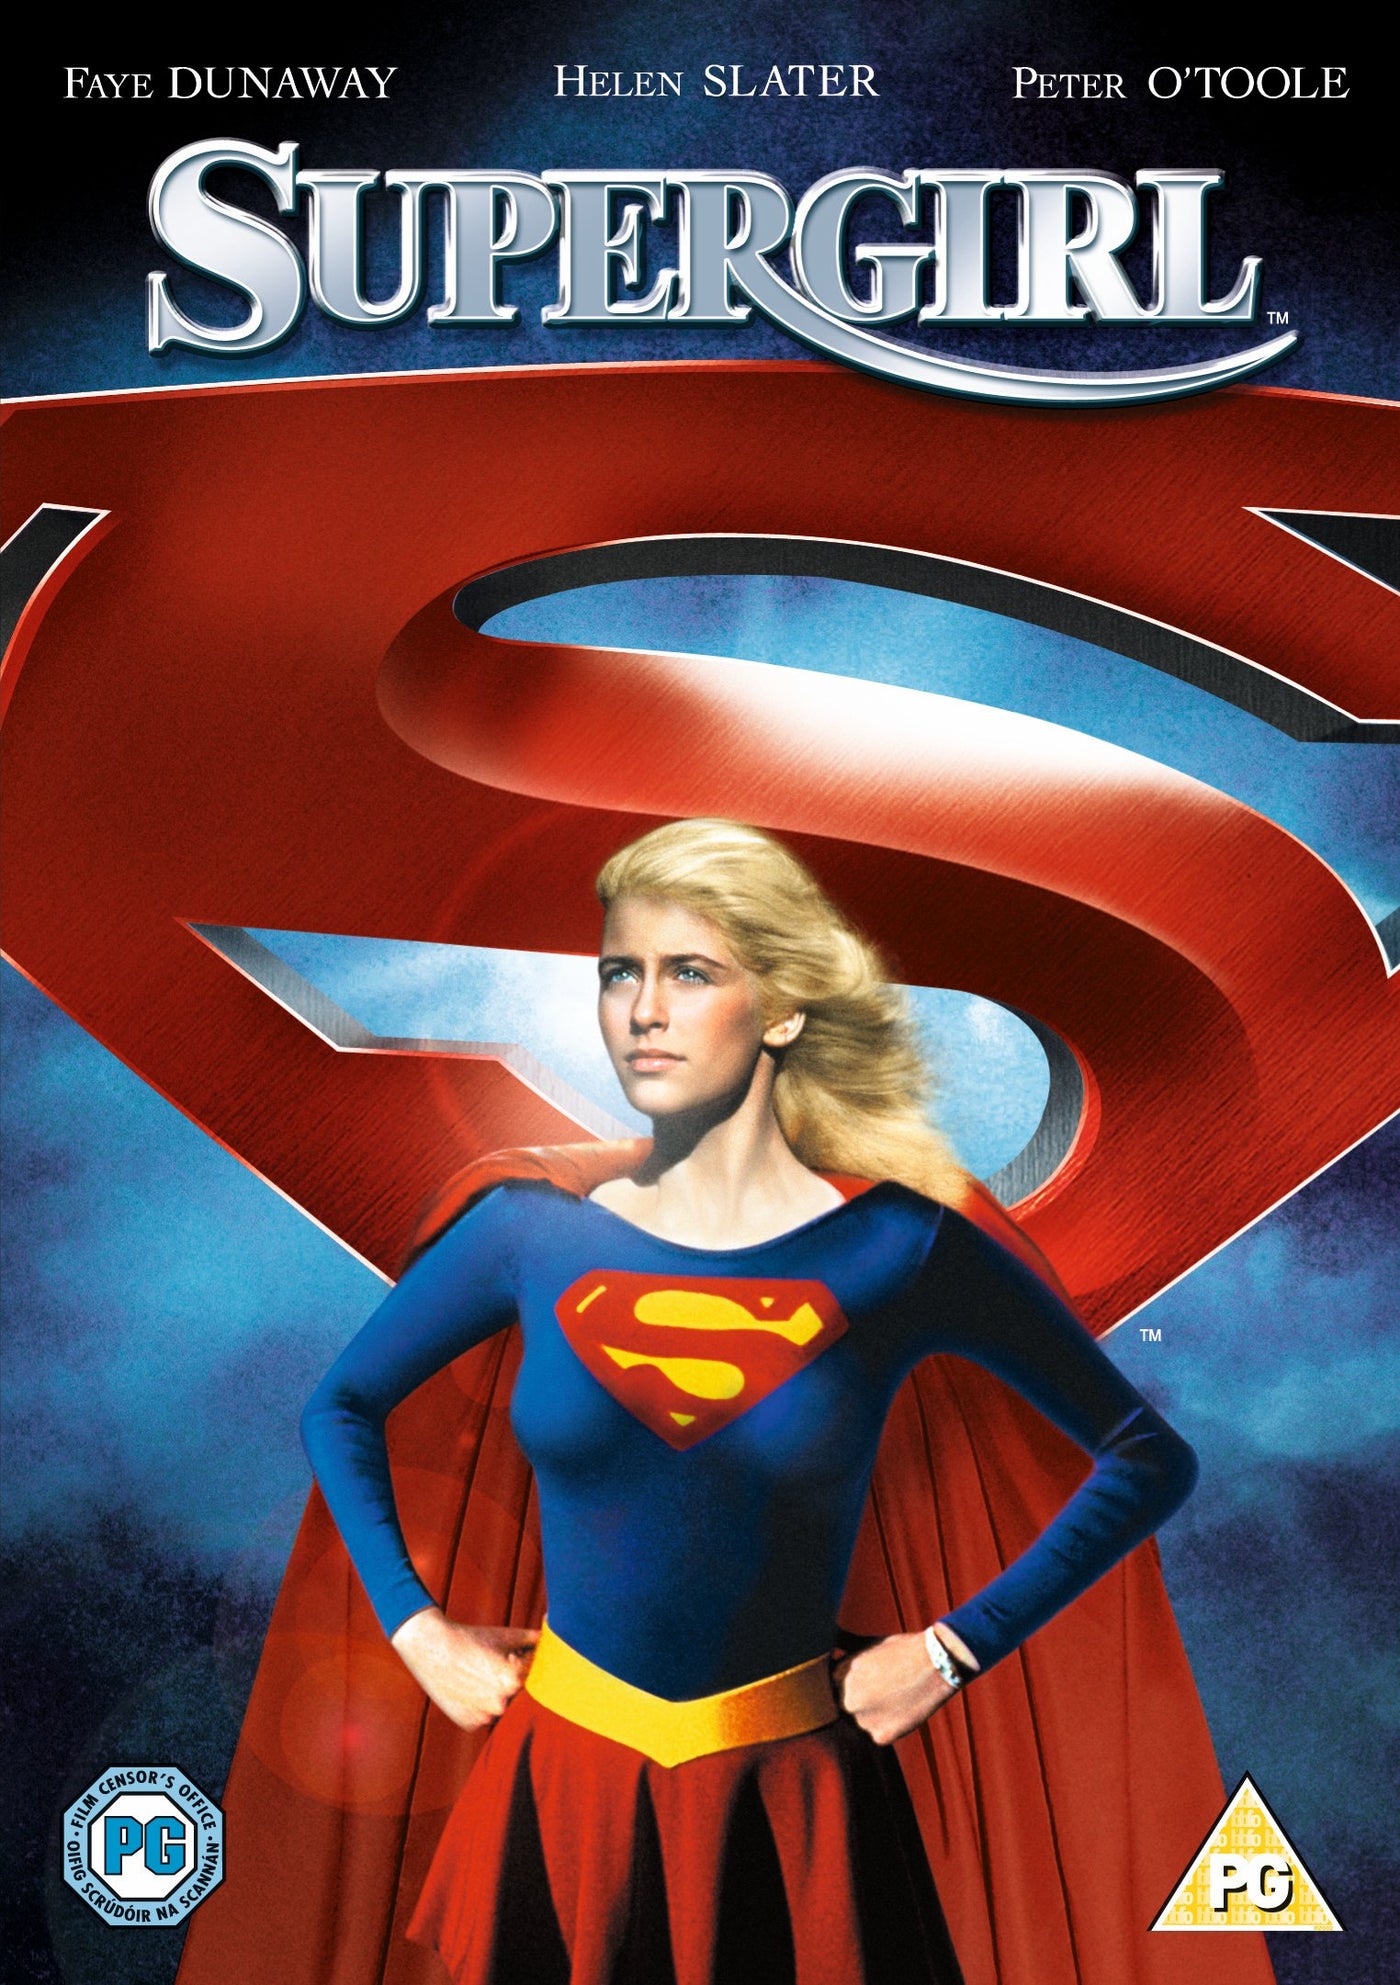 Supergirl [1984] (DVD)